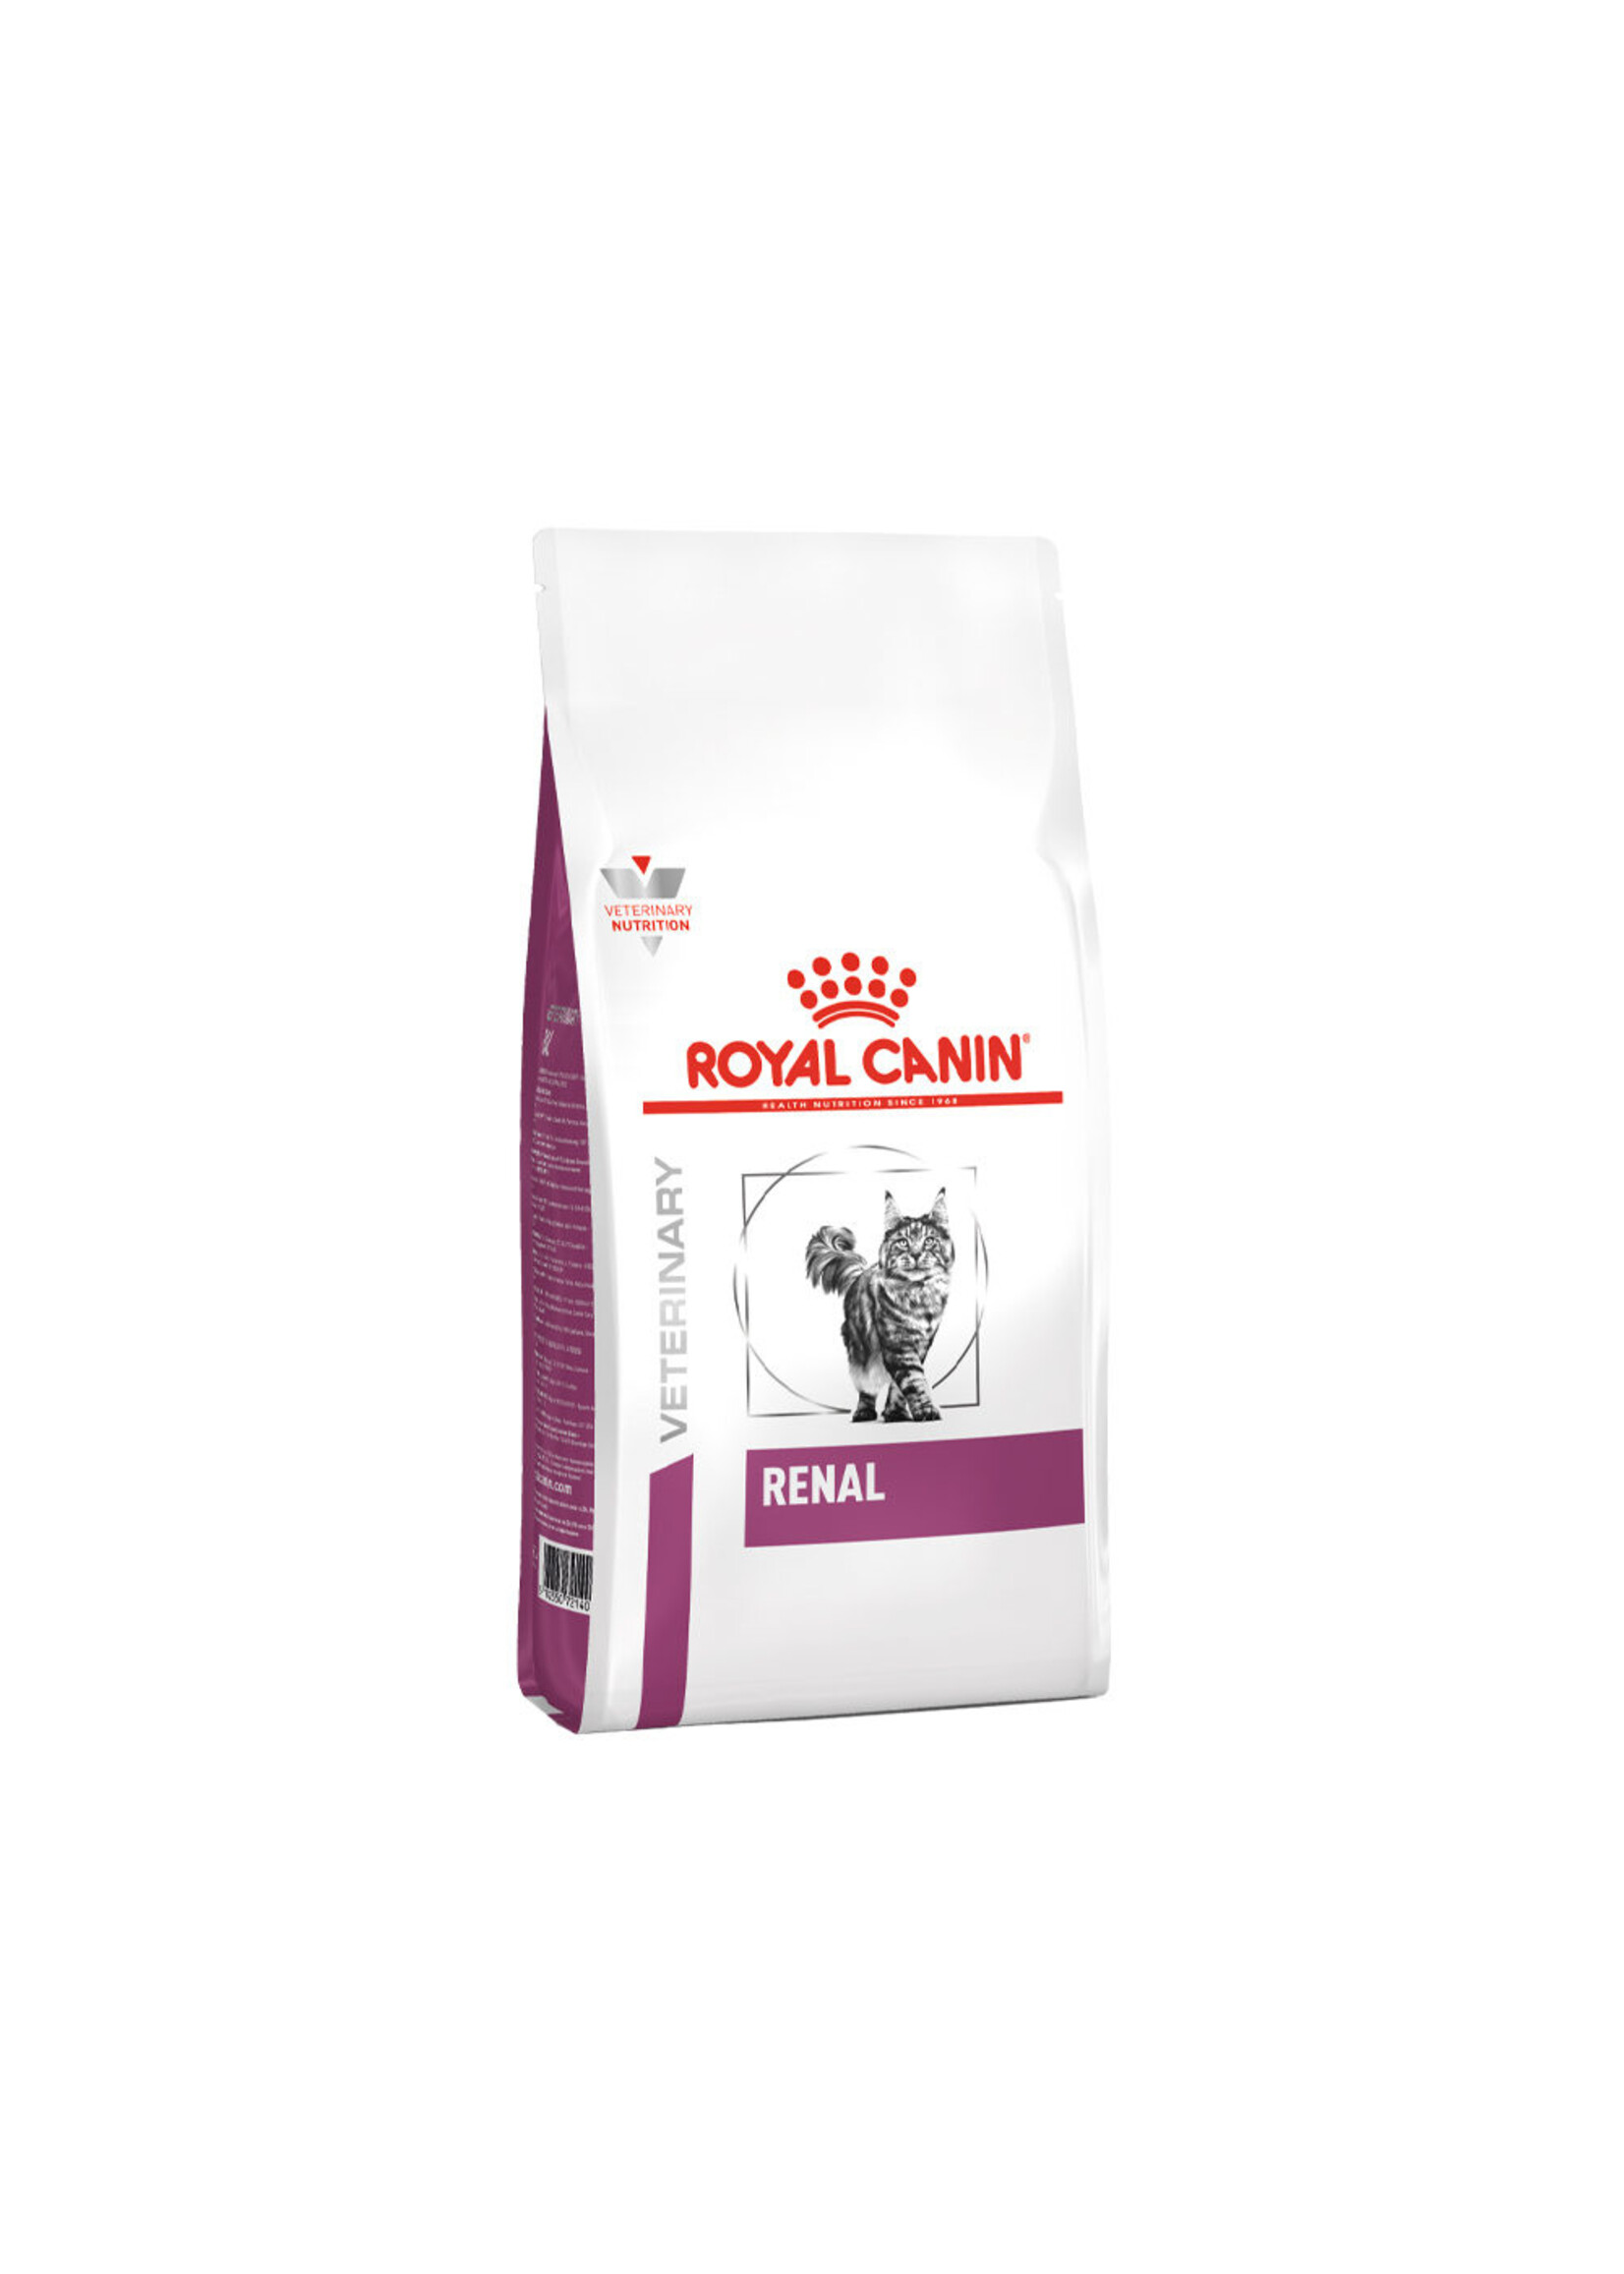 Royal Canin Royal Canin Vdiet Renal Katze 2kg